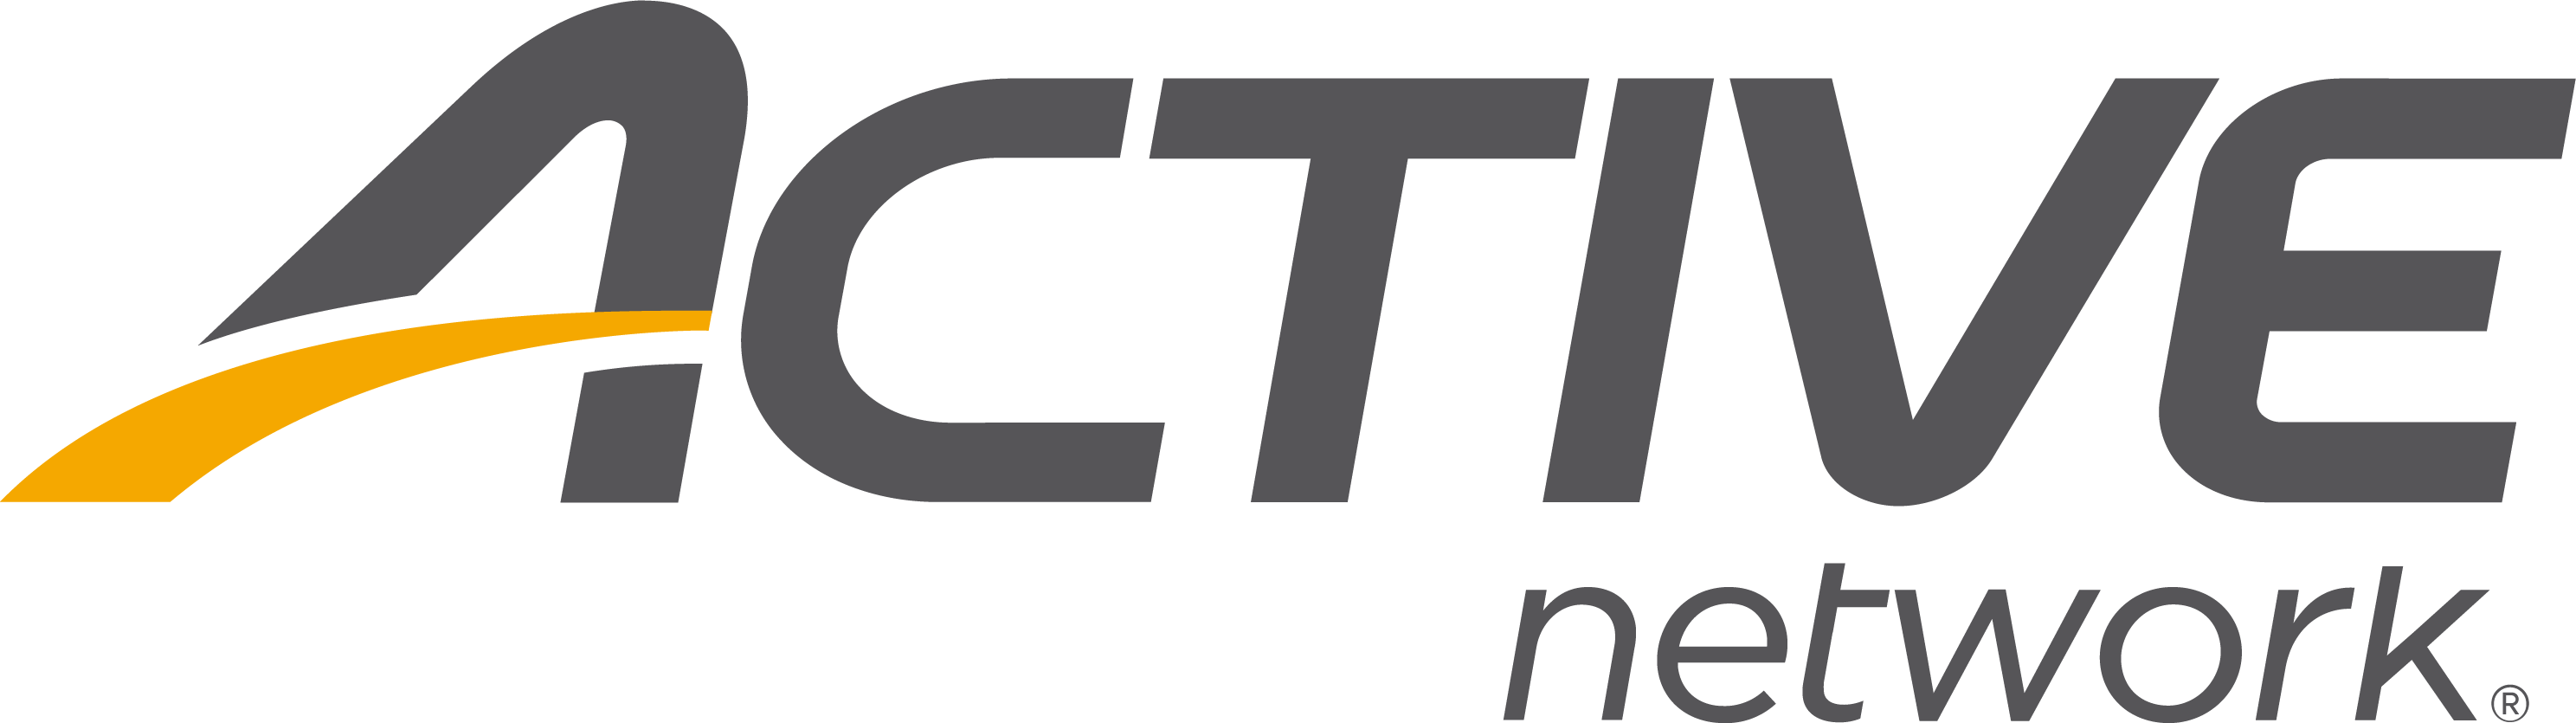 ACTIVE Network Grey Logo-01.png